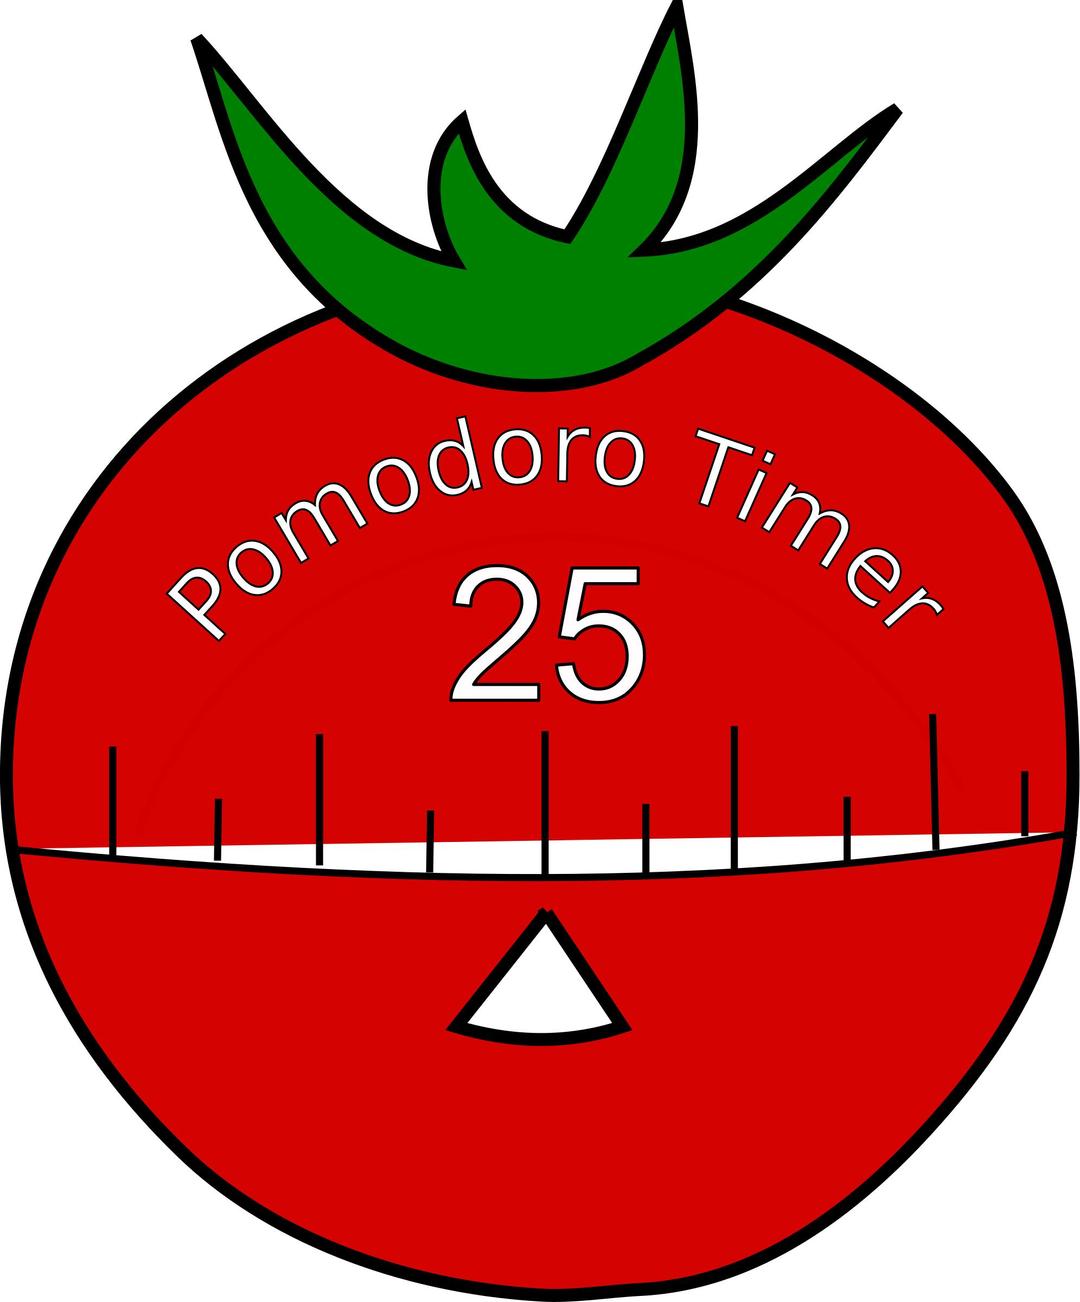 Pomodoro Timer png transparent